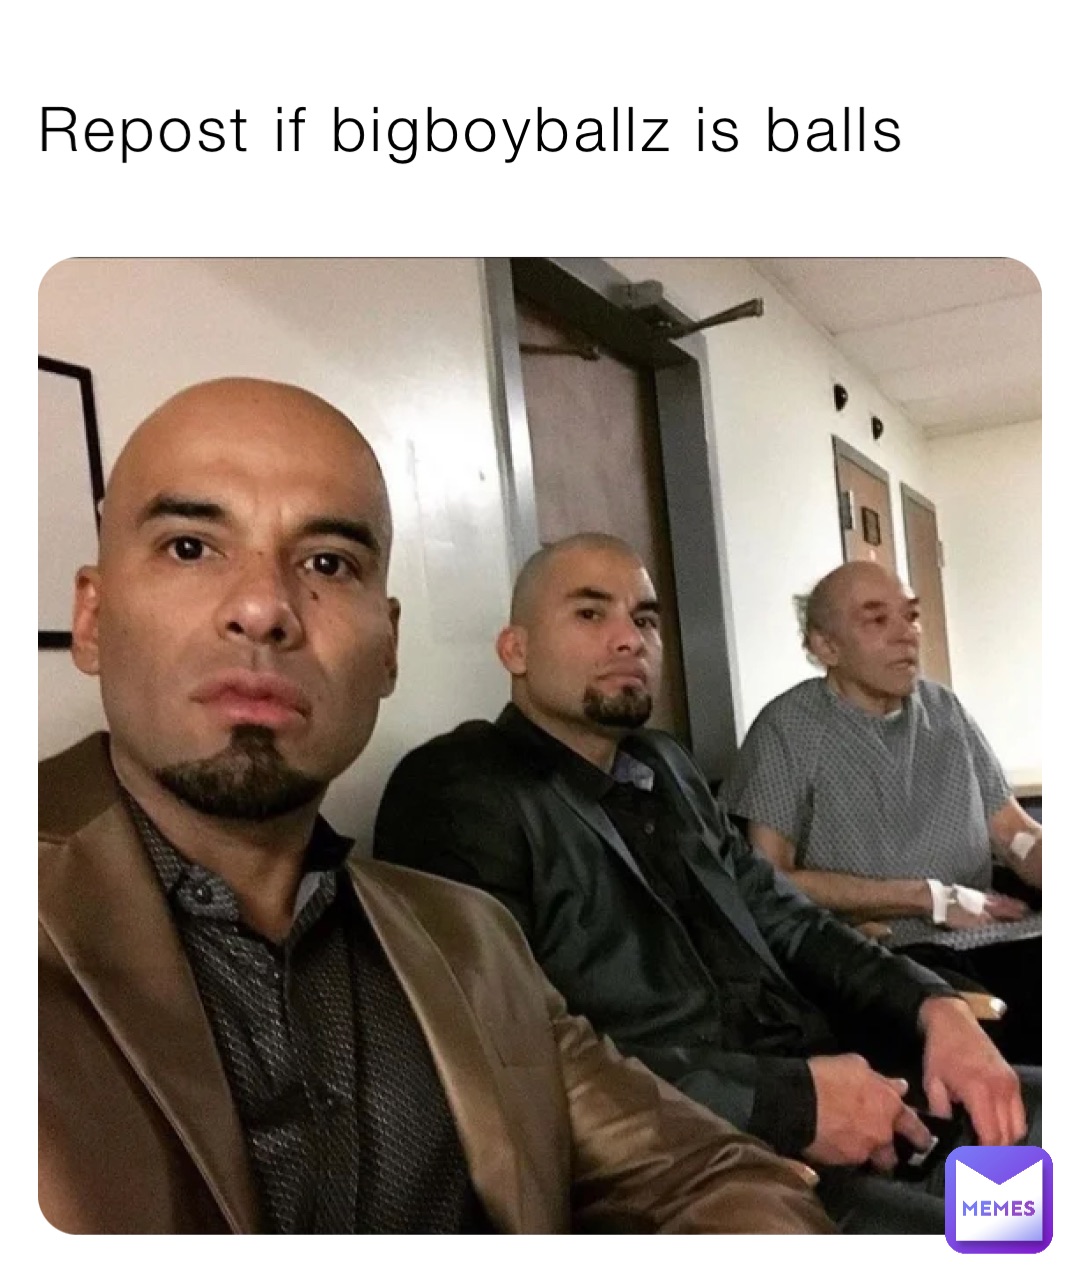 Repost if bigboyballz is balls